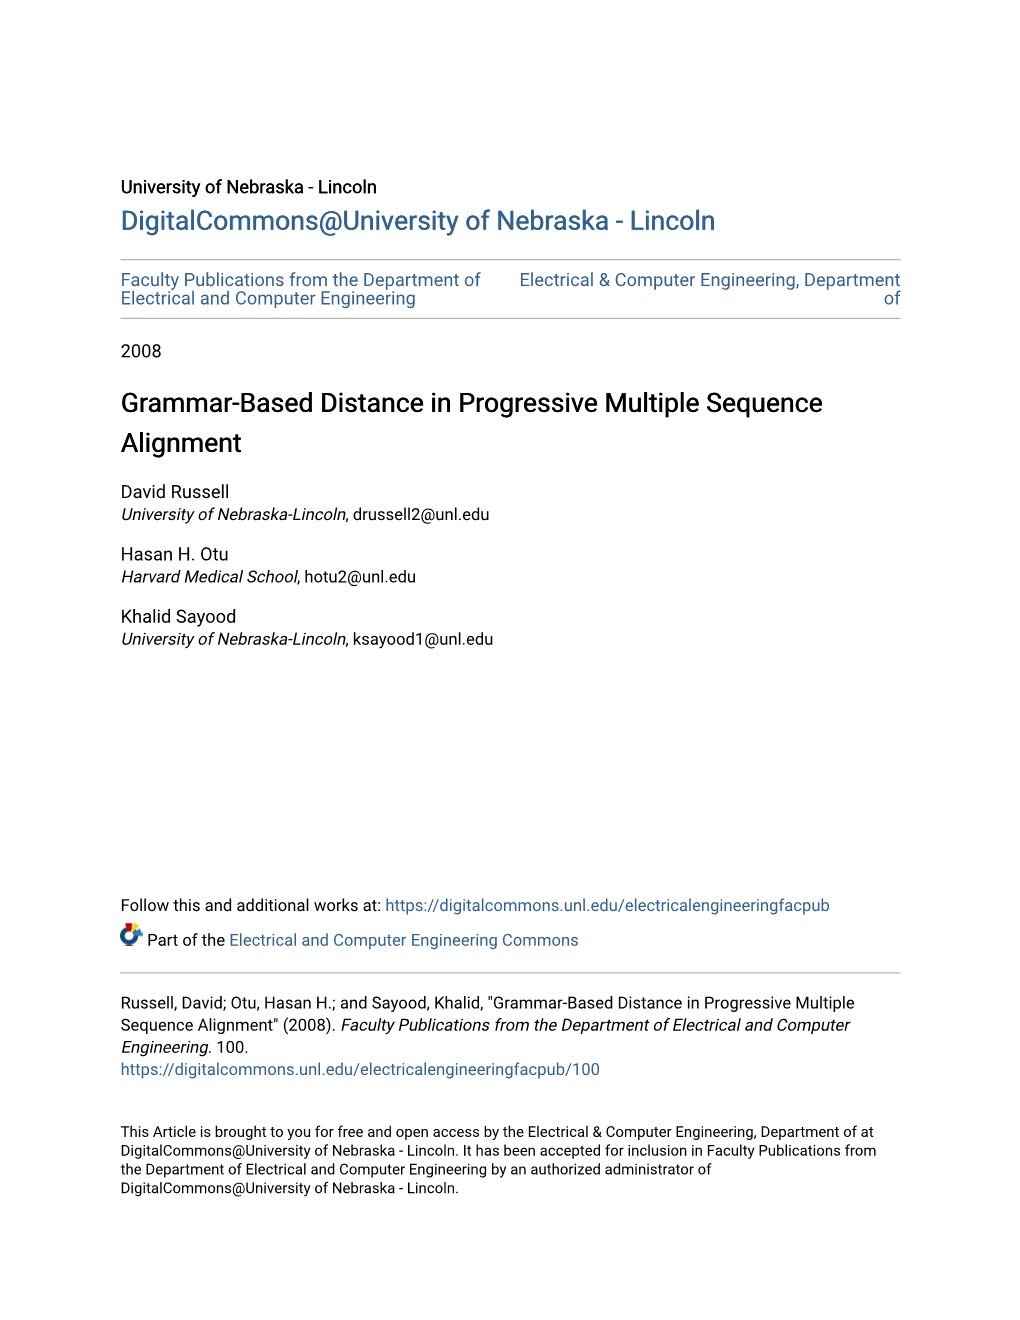 Grammar-Based Distance in Progressive Multiple Sequence Alignment